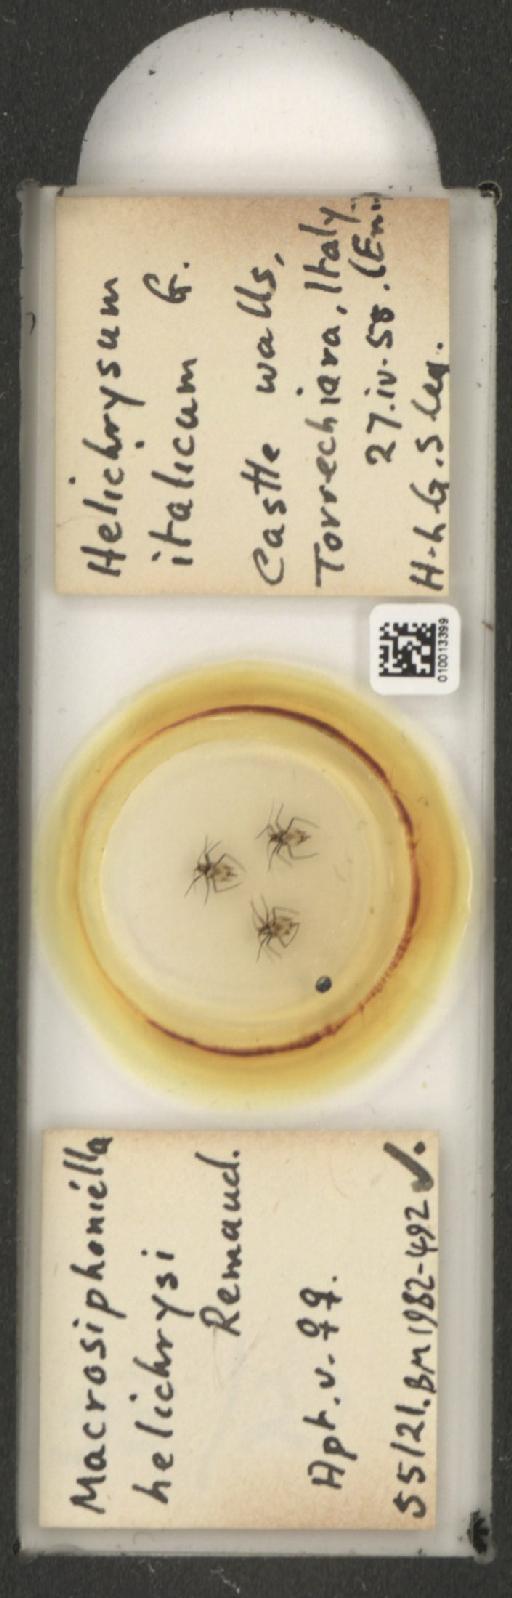 Macrosiphoniella helichrysi Remaudiere, 1952 - 010013399_112660_1094725